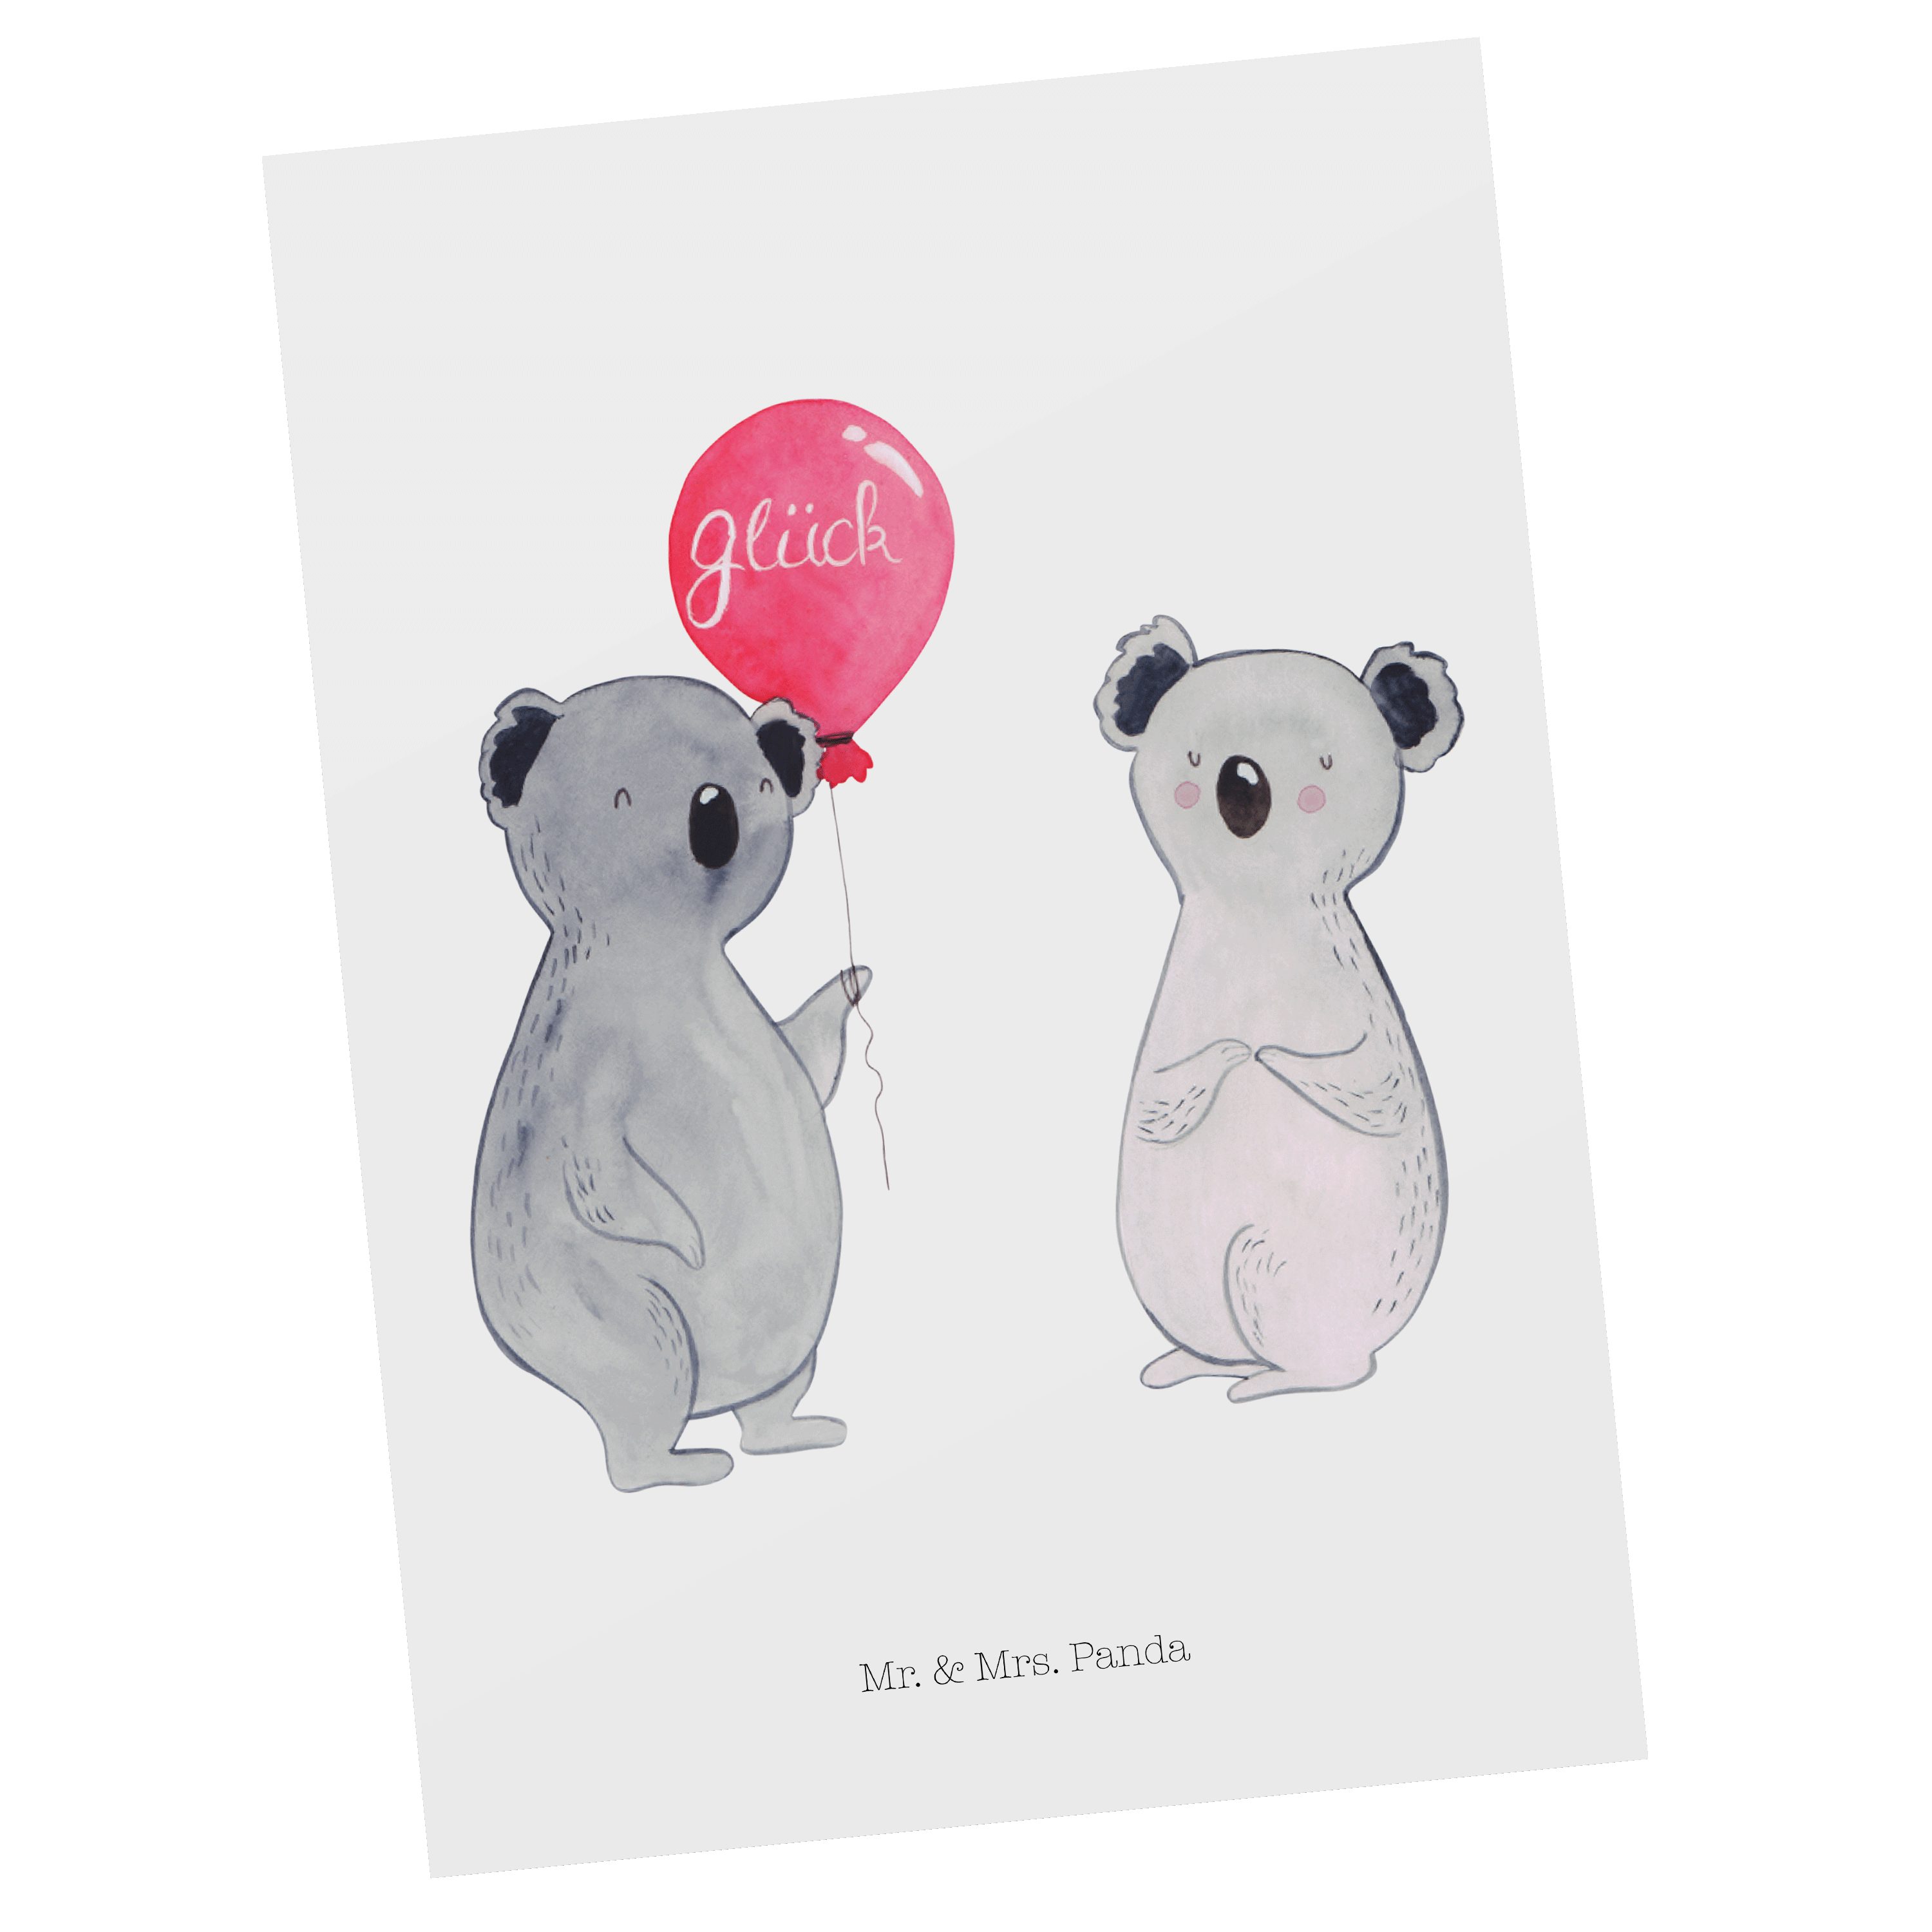 Mr. & Mrs. Panda Postkarte Koala Luftballon - Weiß - Geschenk, Einladungskarte, Grußkarte, Party